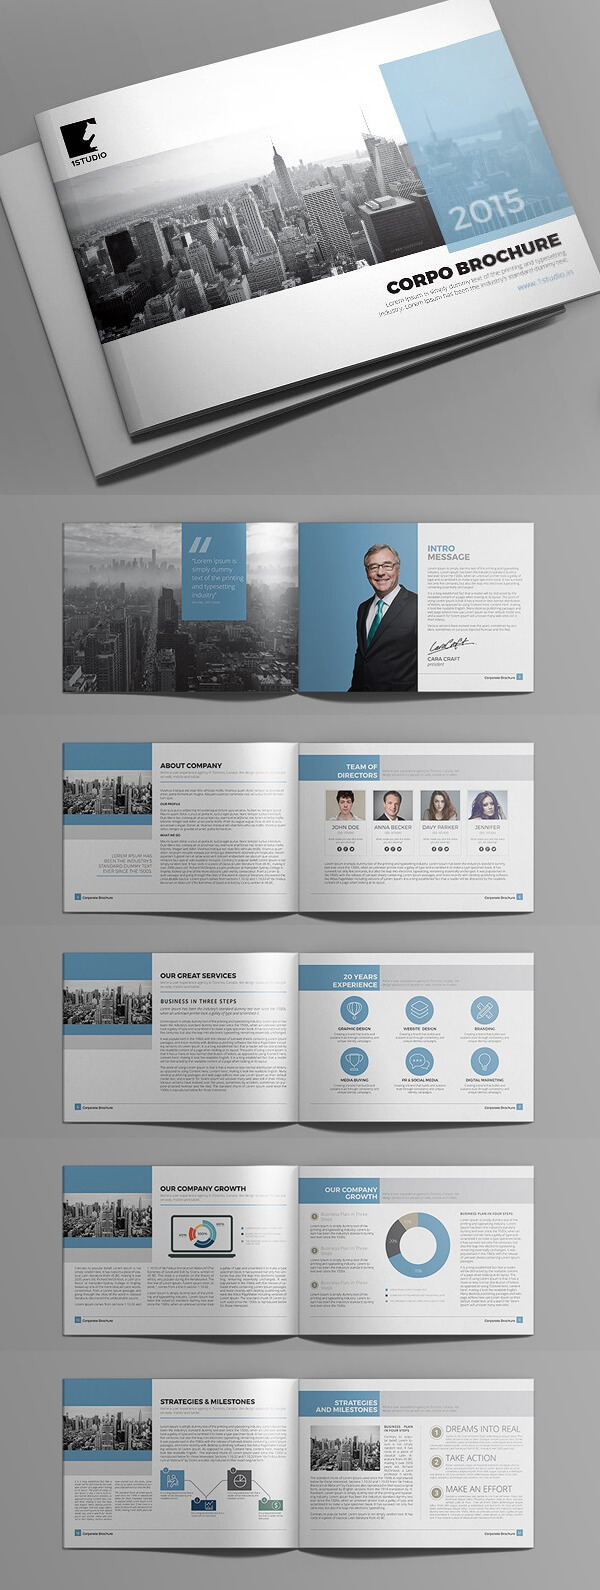 100 Professional Corporate Brochure Templates | Design With Regard To Professional Brochure Design Templates